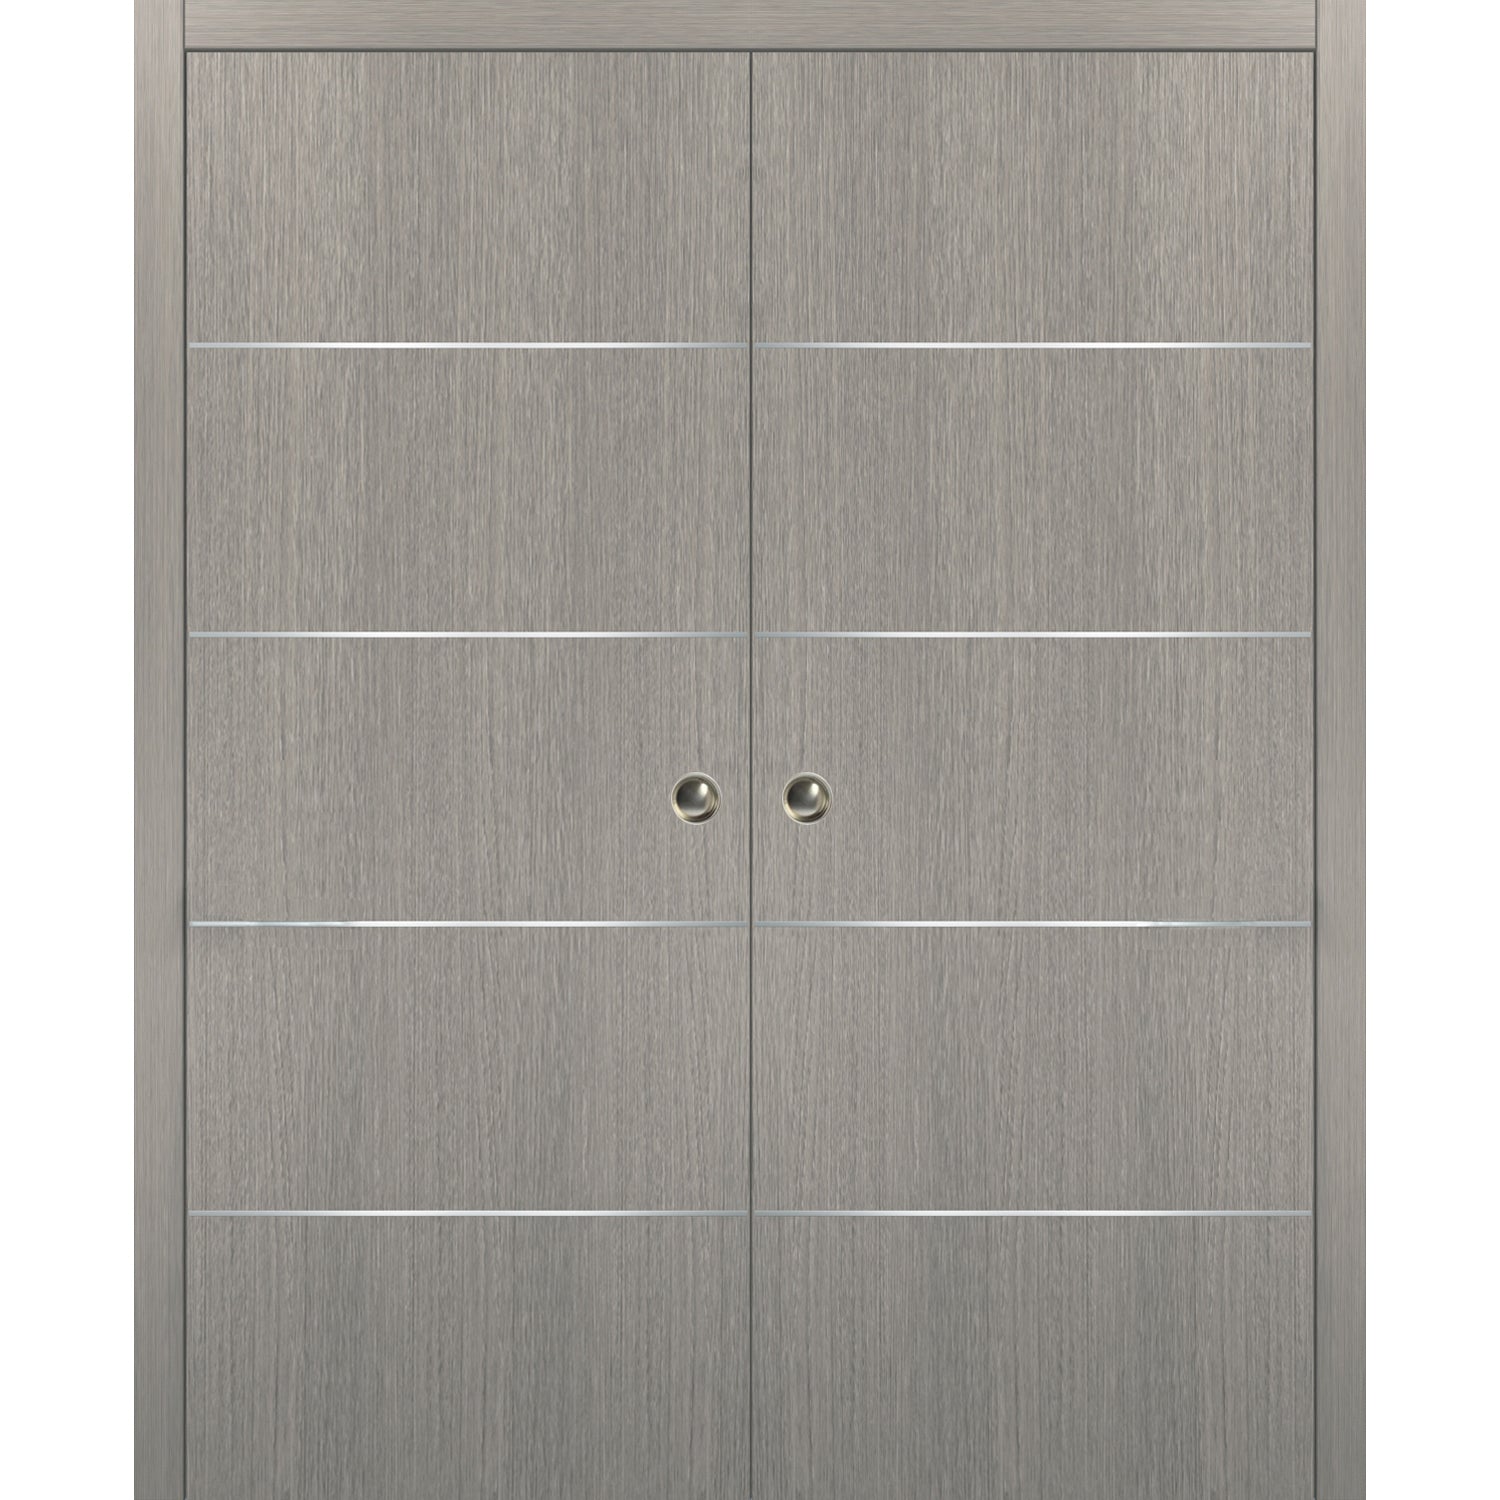 SARTODOORS Double Pocket Doors 64 x 84 with Frames | Planum 0020 Grey Oak | Rail Hardware | Wood Sliding Closet